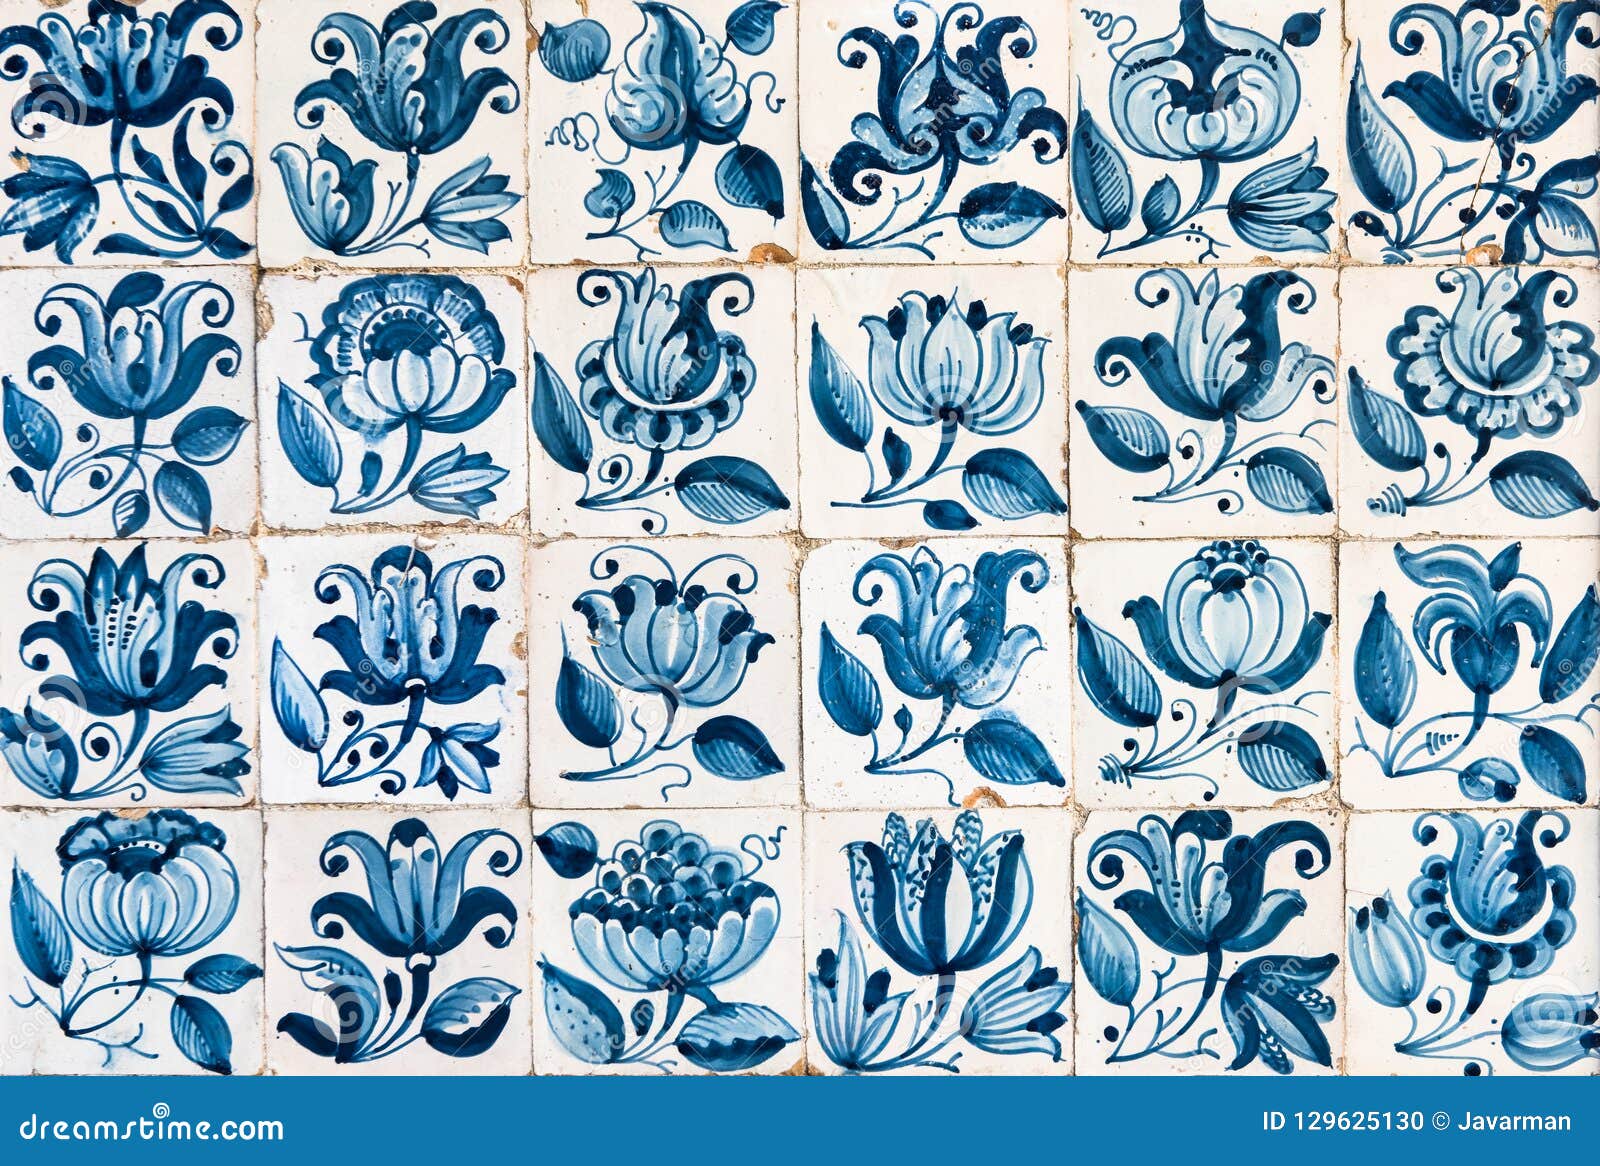 vintage azulejos, traditional portuguese tiles